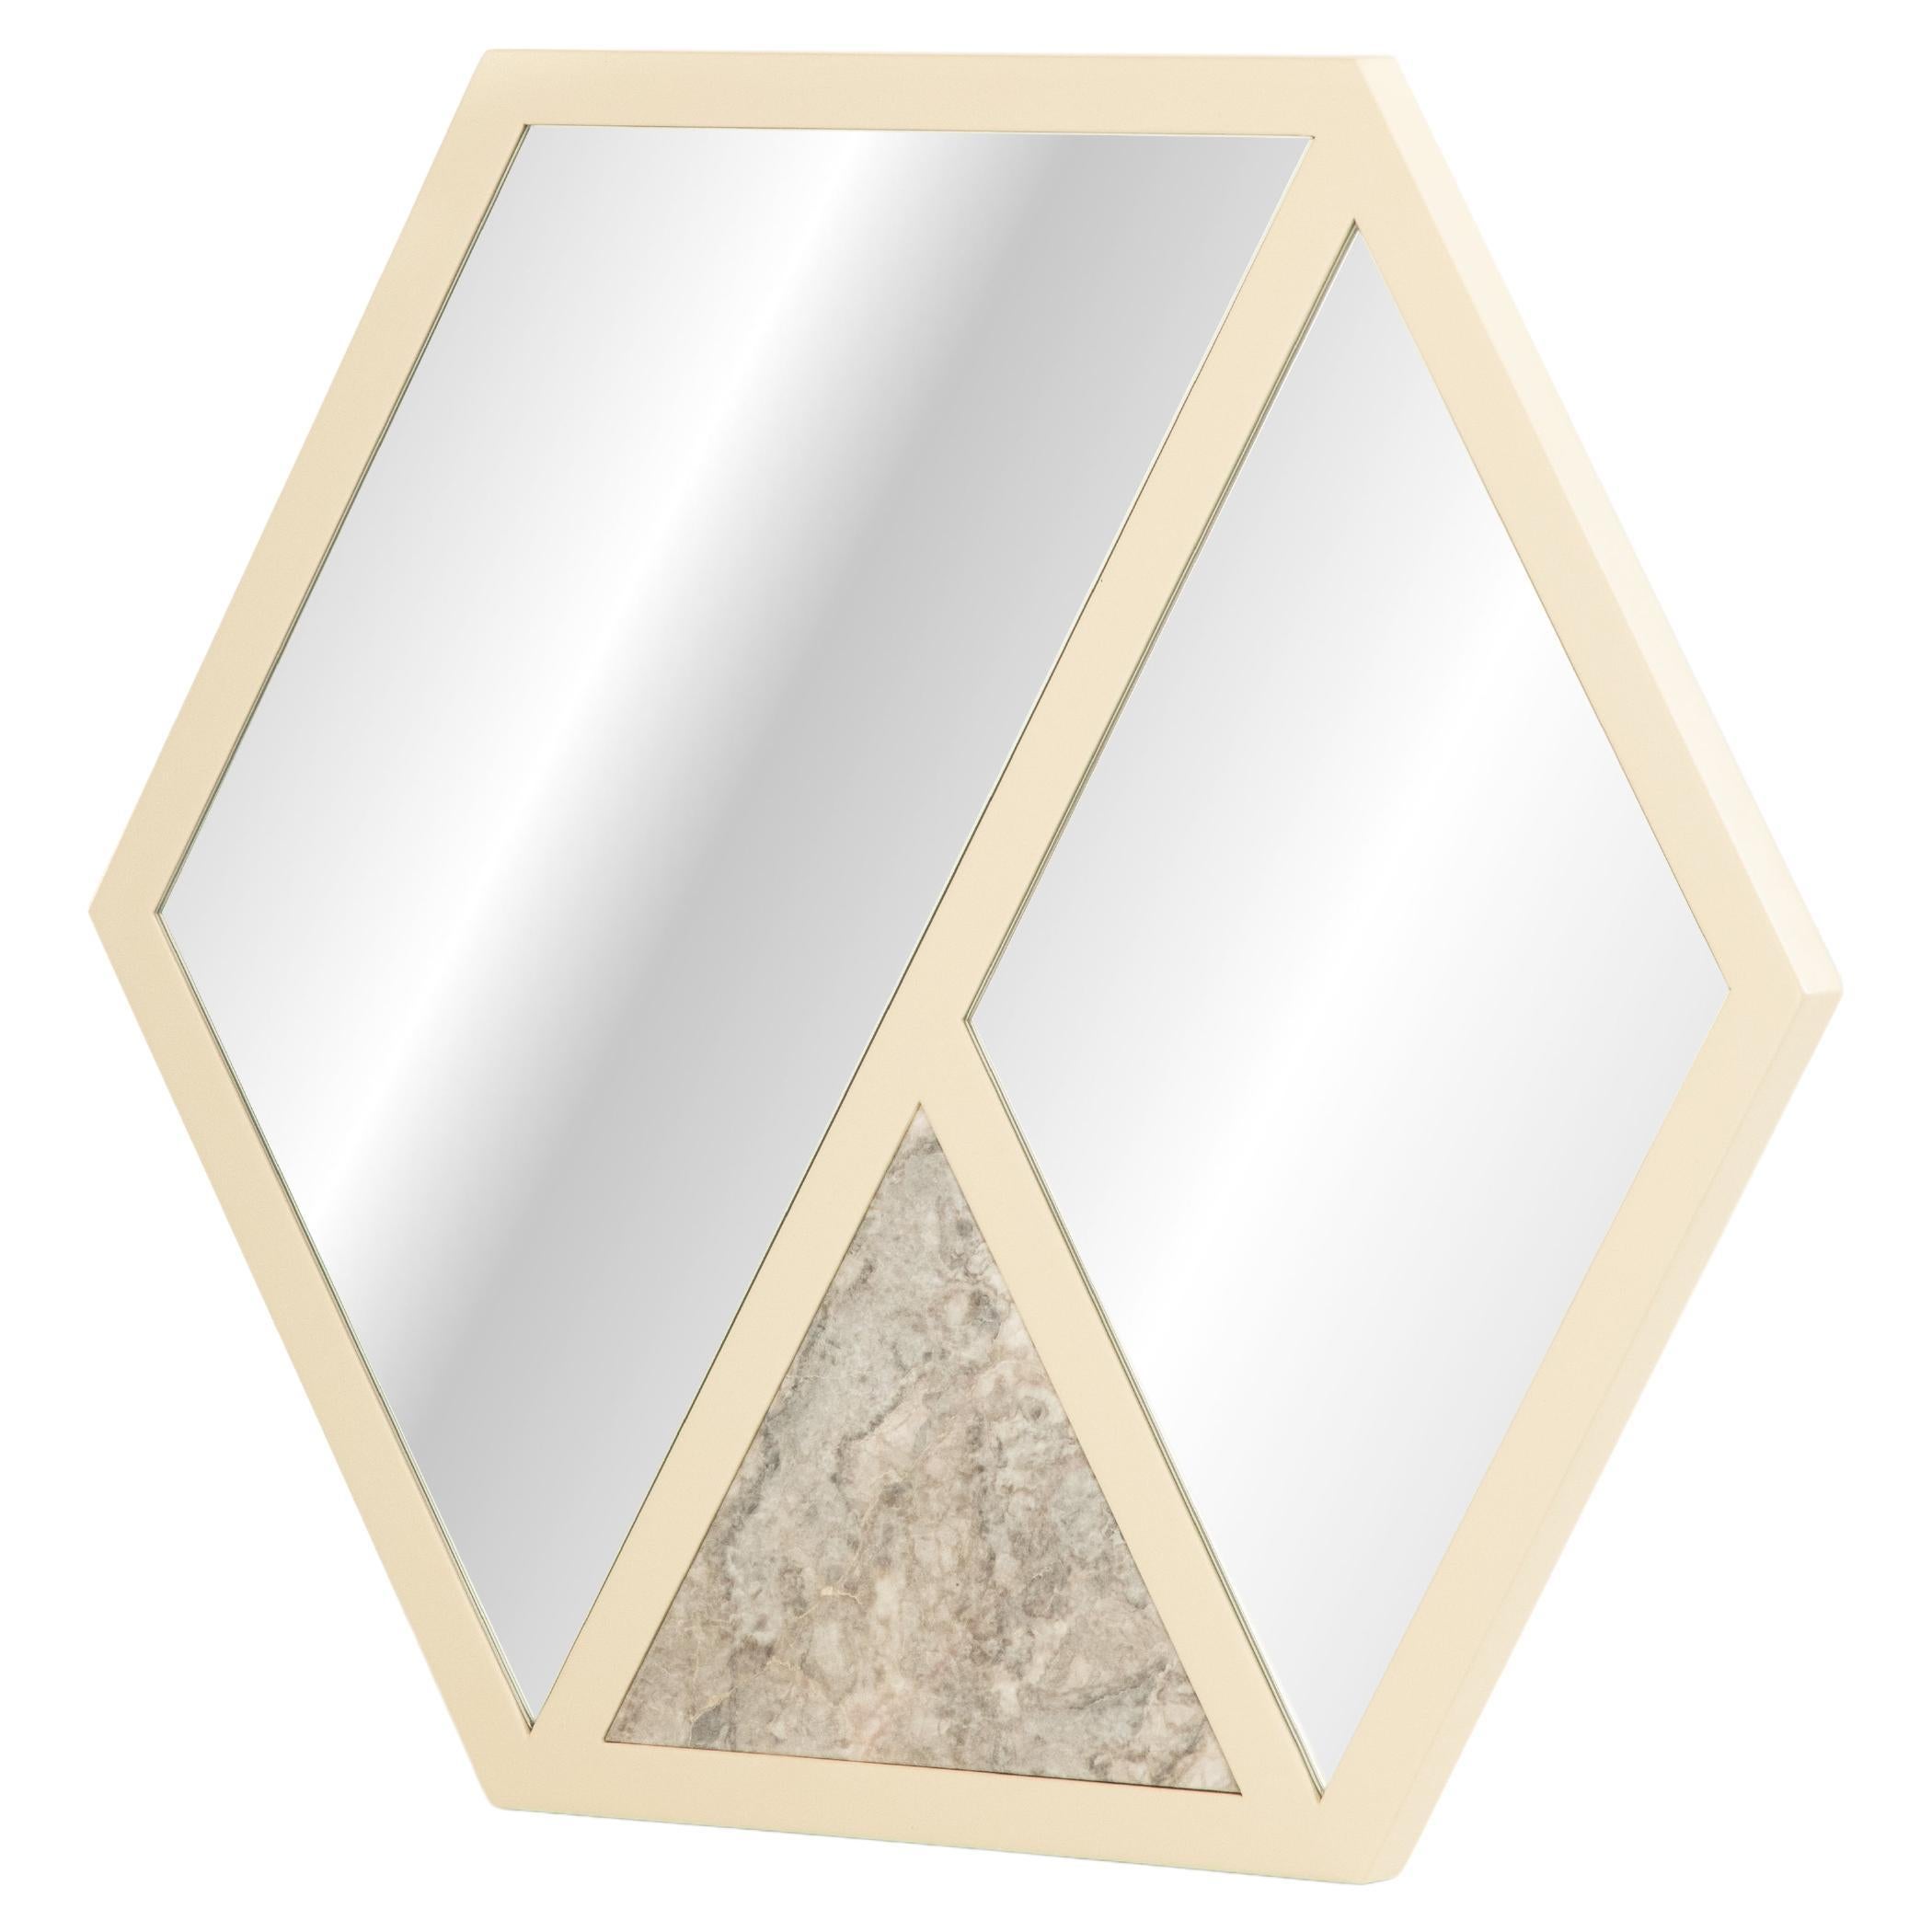 Miroir hexagonal en marbre, fabriqué à la main en Italie